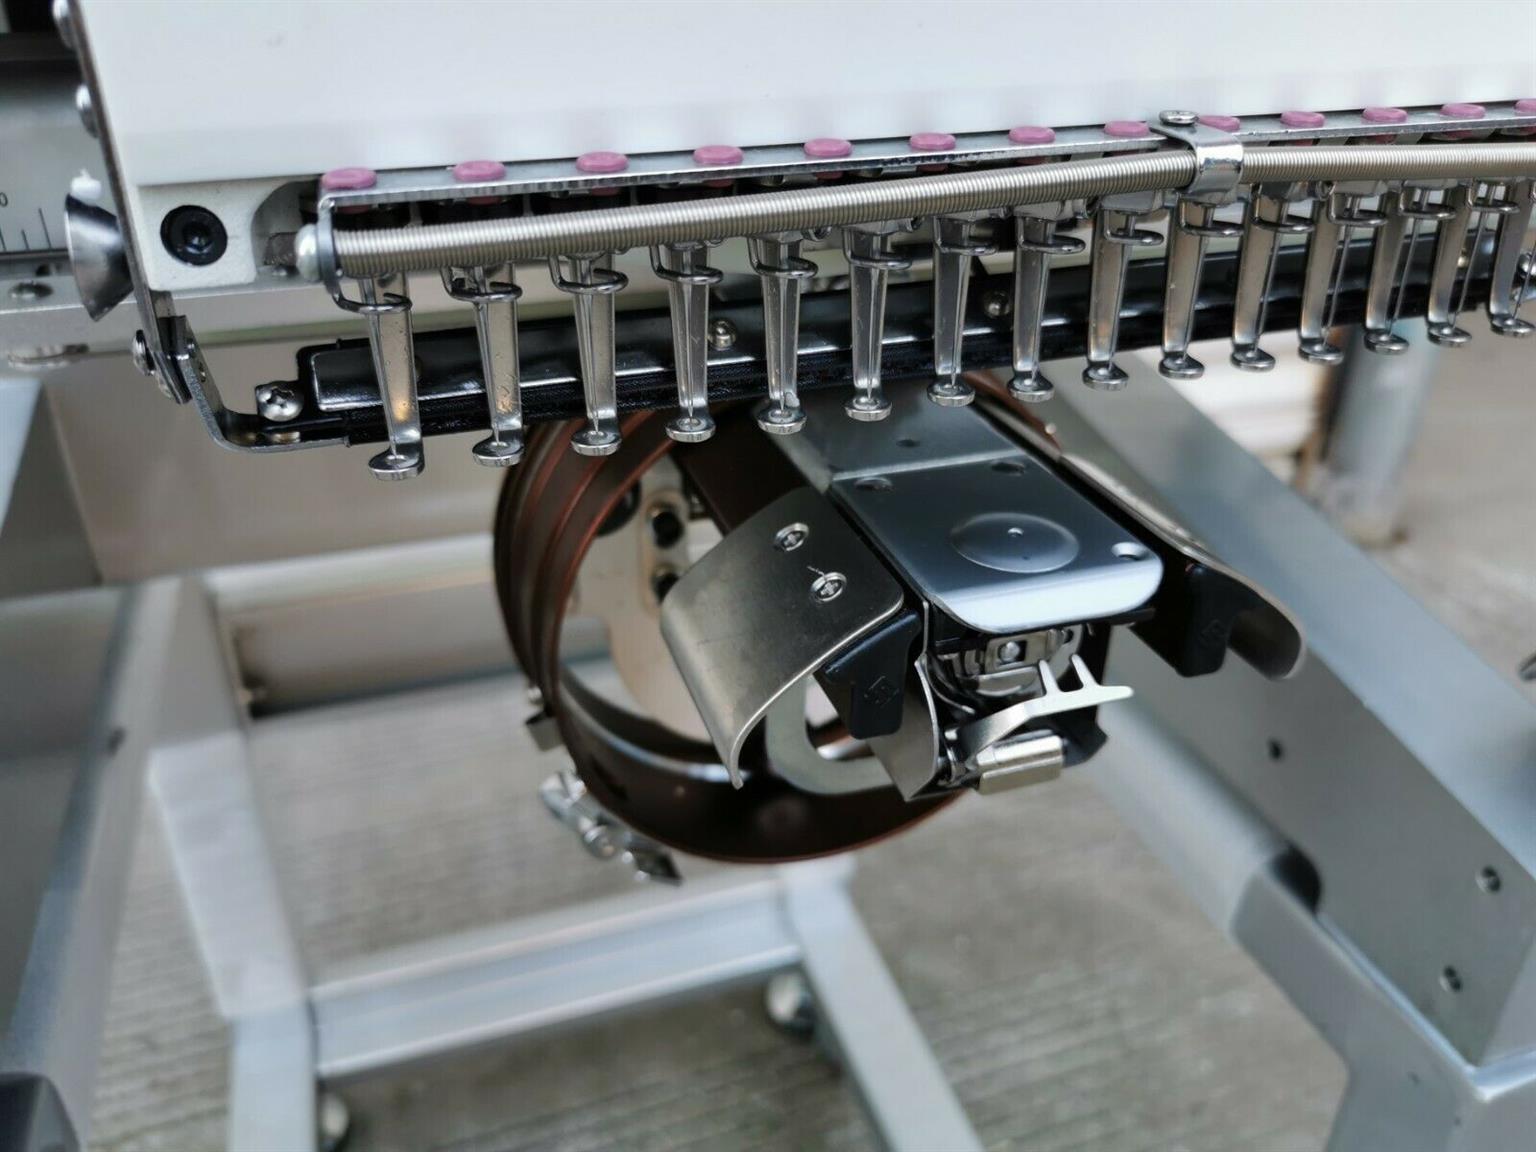 Sewing Embroidery Machine EM101 Chroma